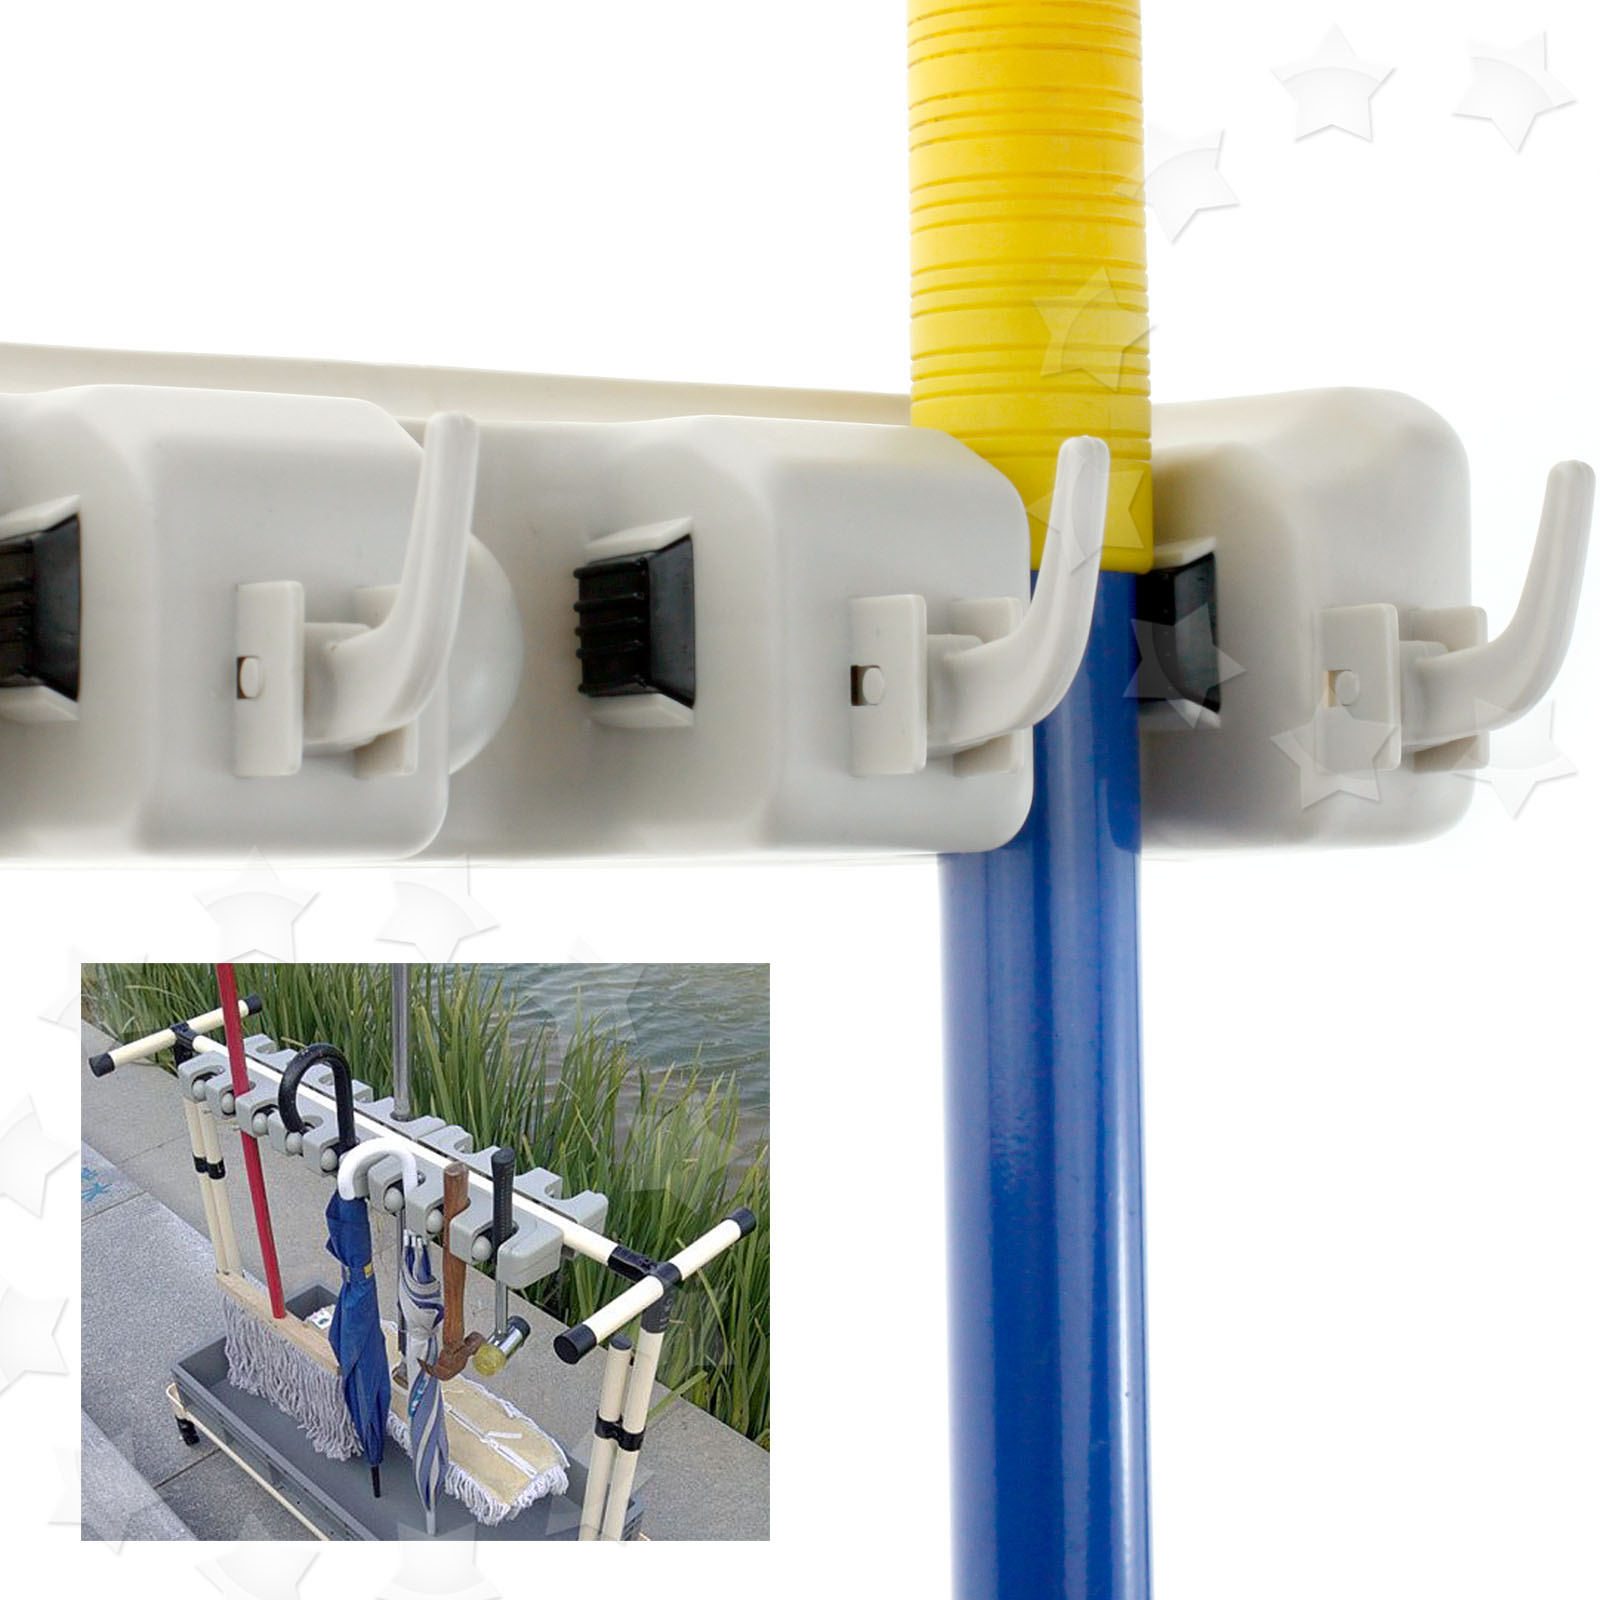 5 Position Mop Broom Organizer Holder Brush Wall Storage Mounted Hanger Rack | eBay1600 x 1600